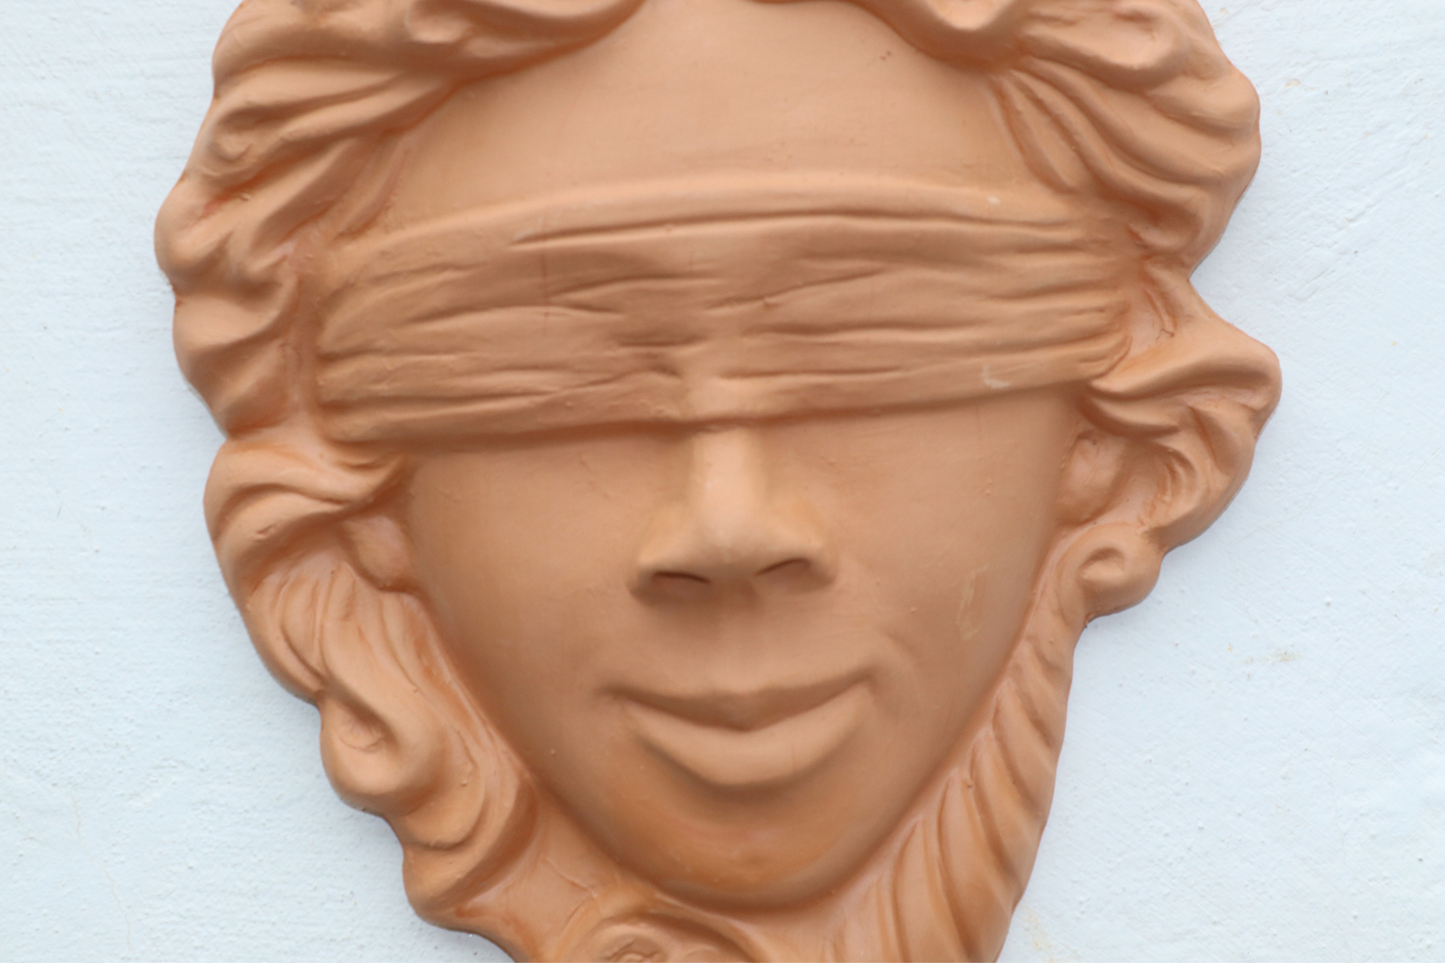 Dea bendata maschera in terracotta porta fortuna da appendere alla parete